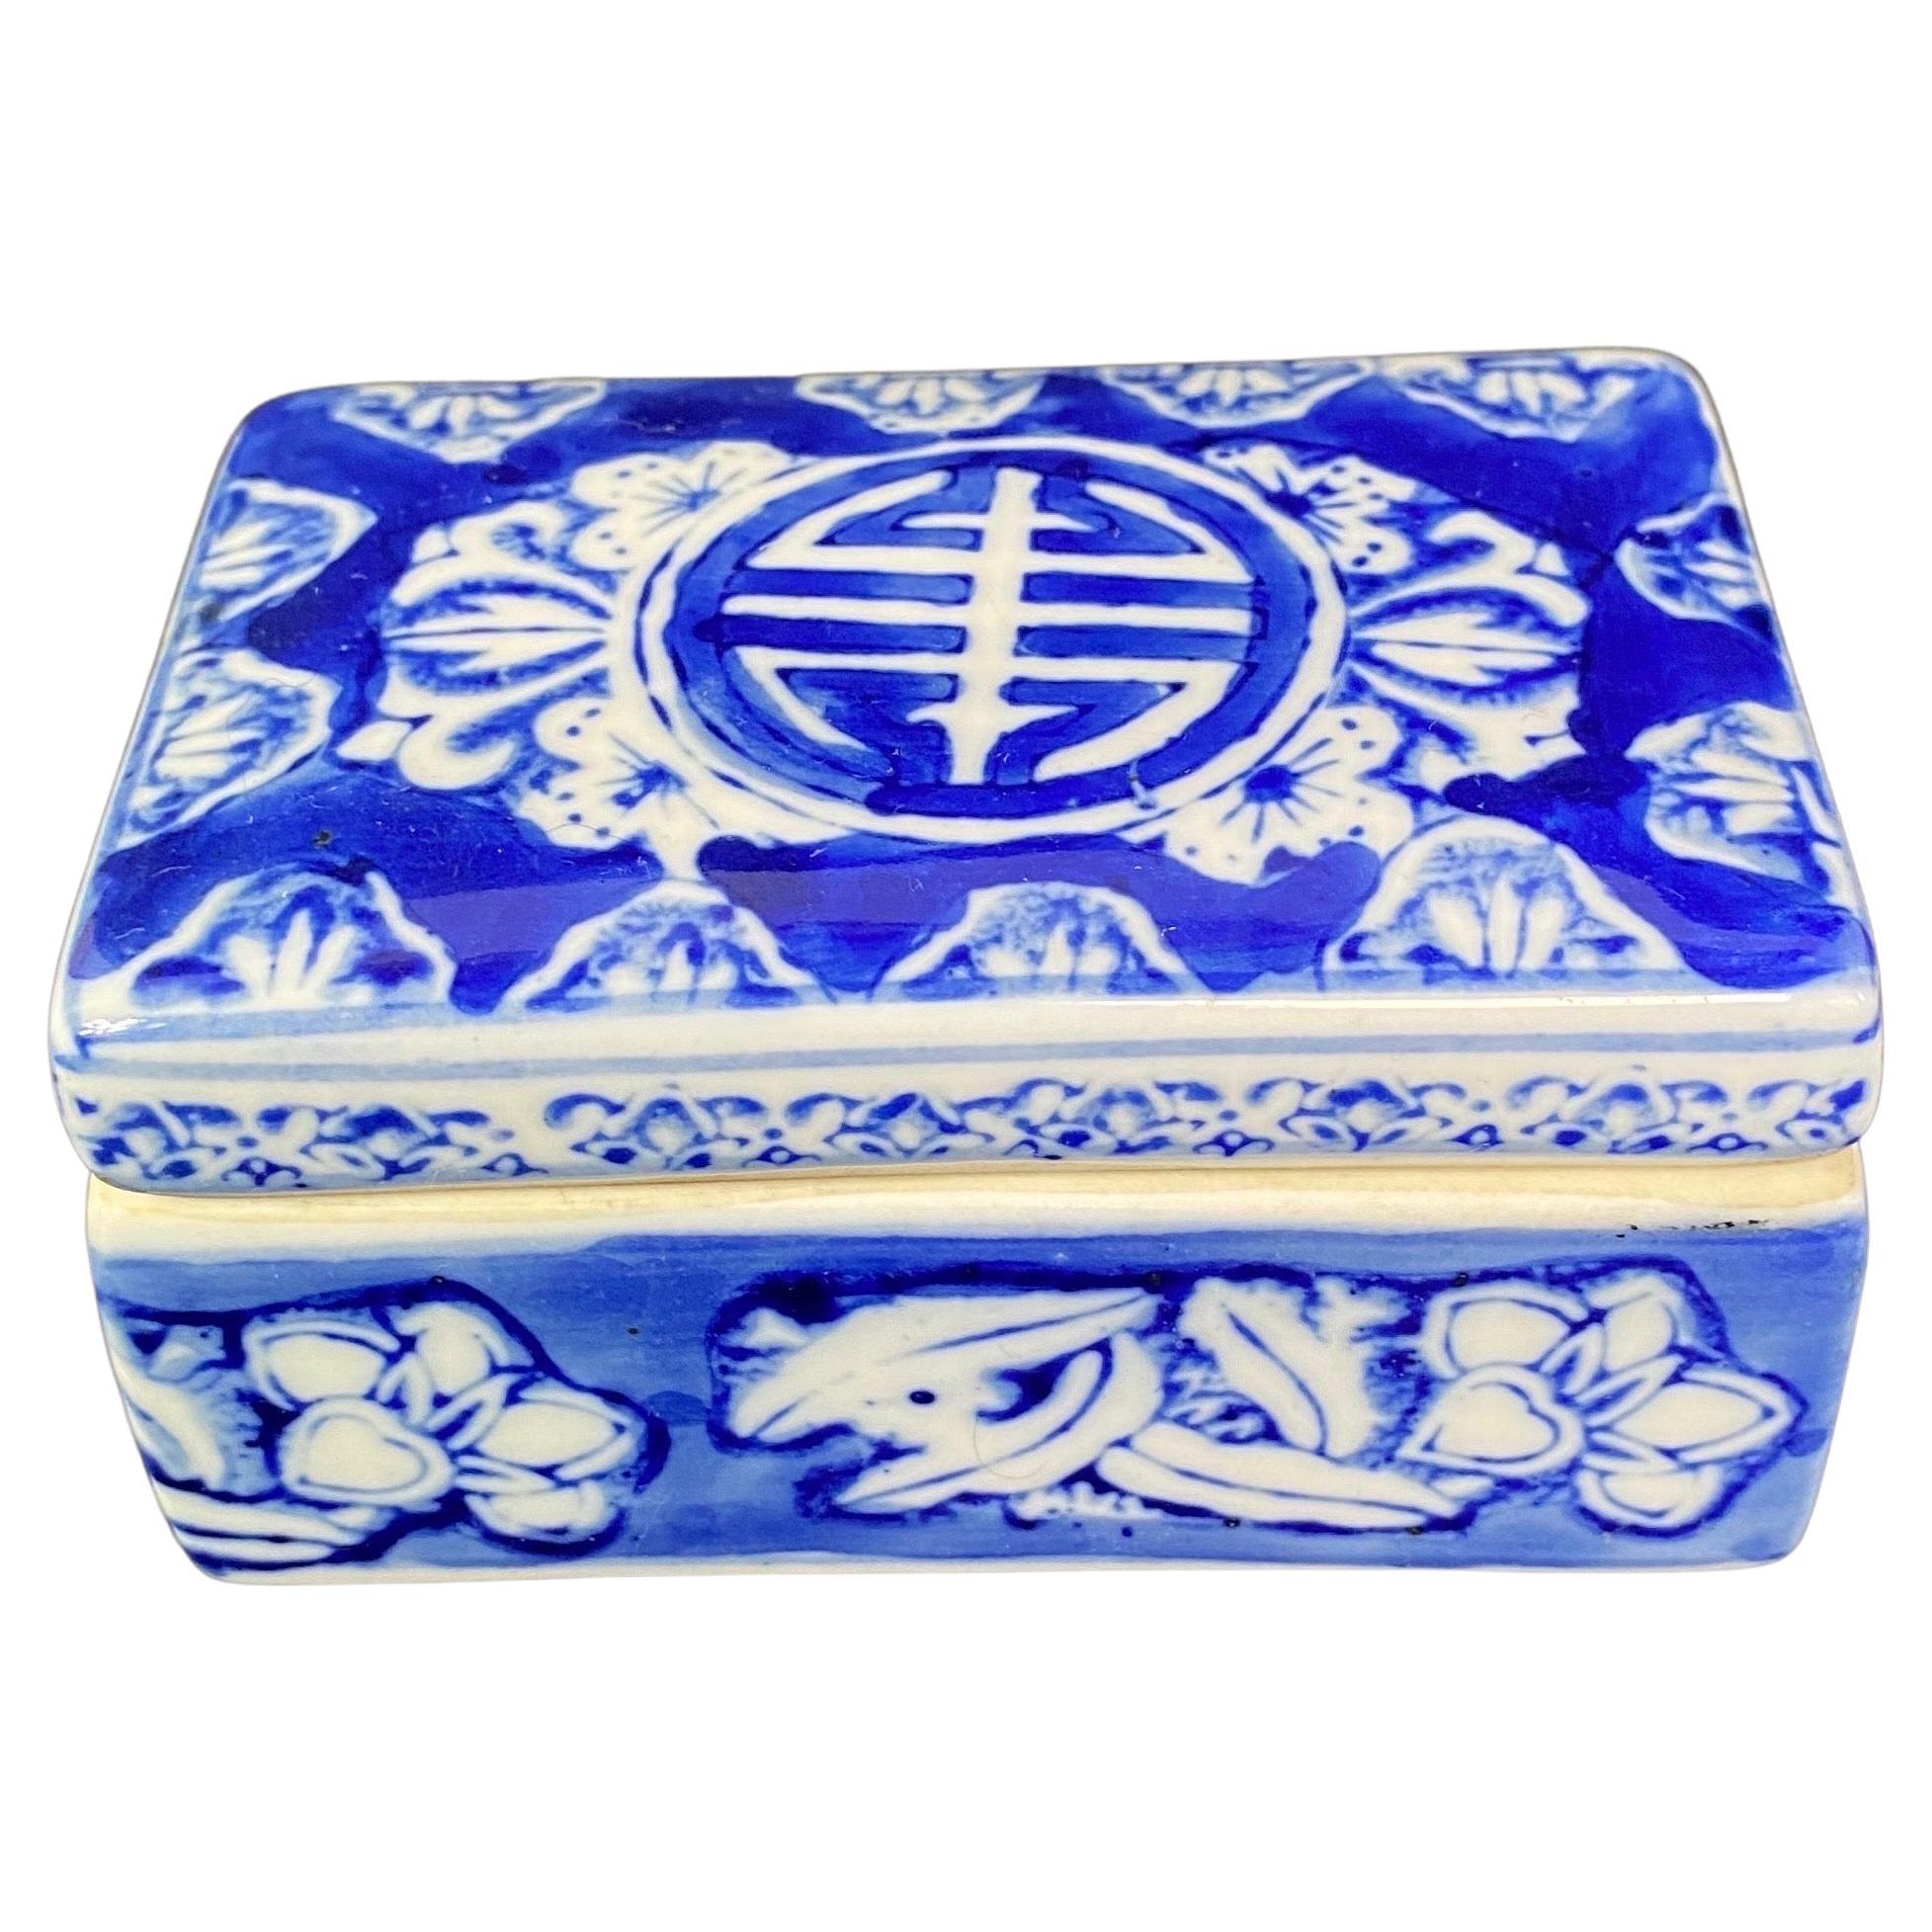 Blue and White Porcelain Ink Writing Jewerly Box - China 1900 Asian art XXth